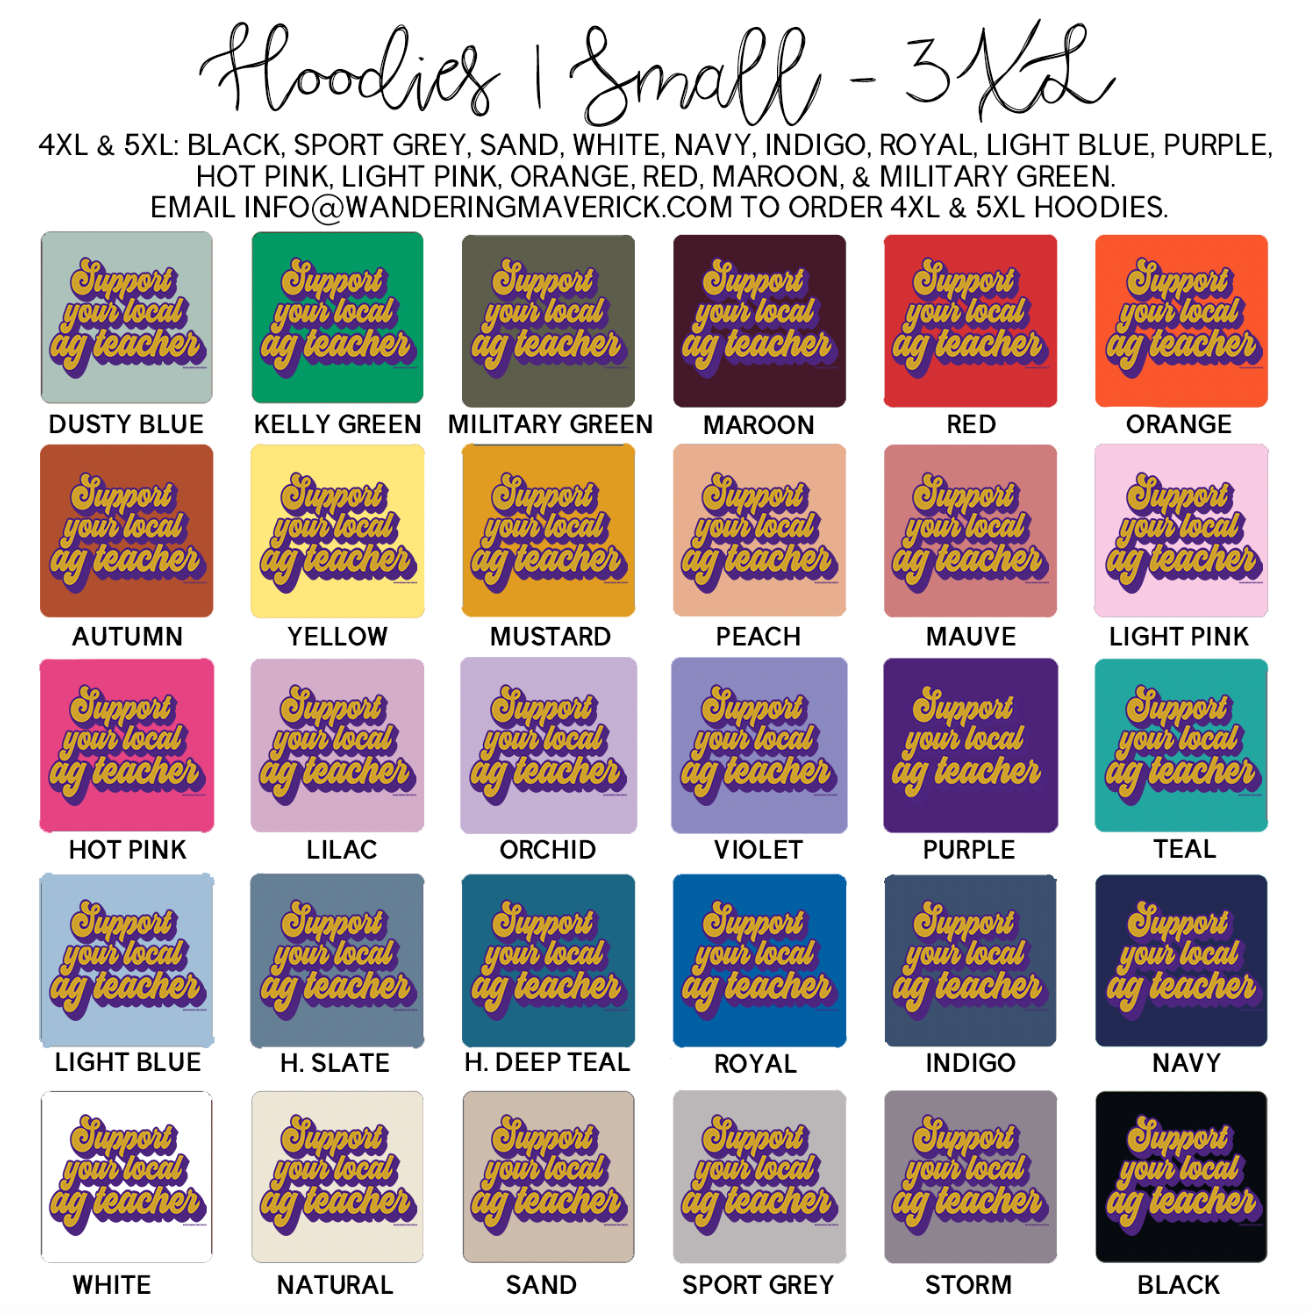 Retro Support Your Local Ag Teacher Purple & Gold Hoodie (S-3XL) Unisex - Multiple Colors!